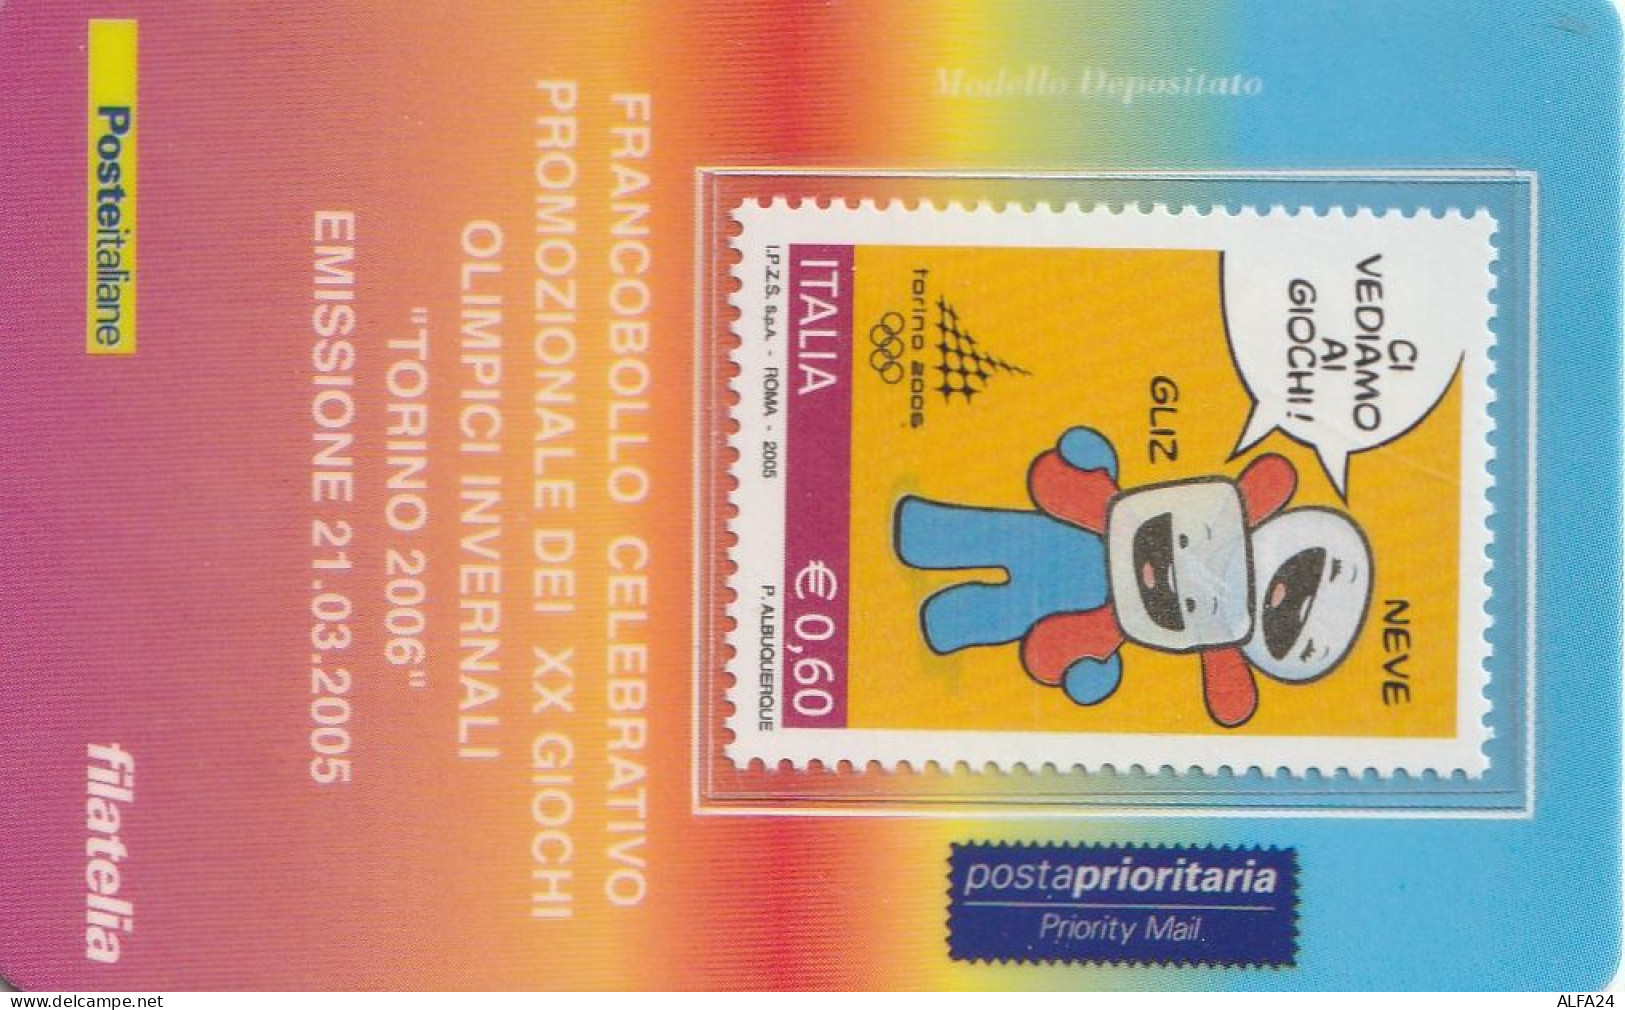 TESSERA FILATELICA VALORE 0,6 EURO TORINO 2006 (TF1053 - Philatelistische Karten